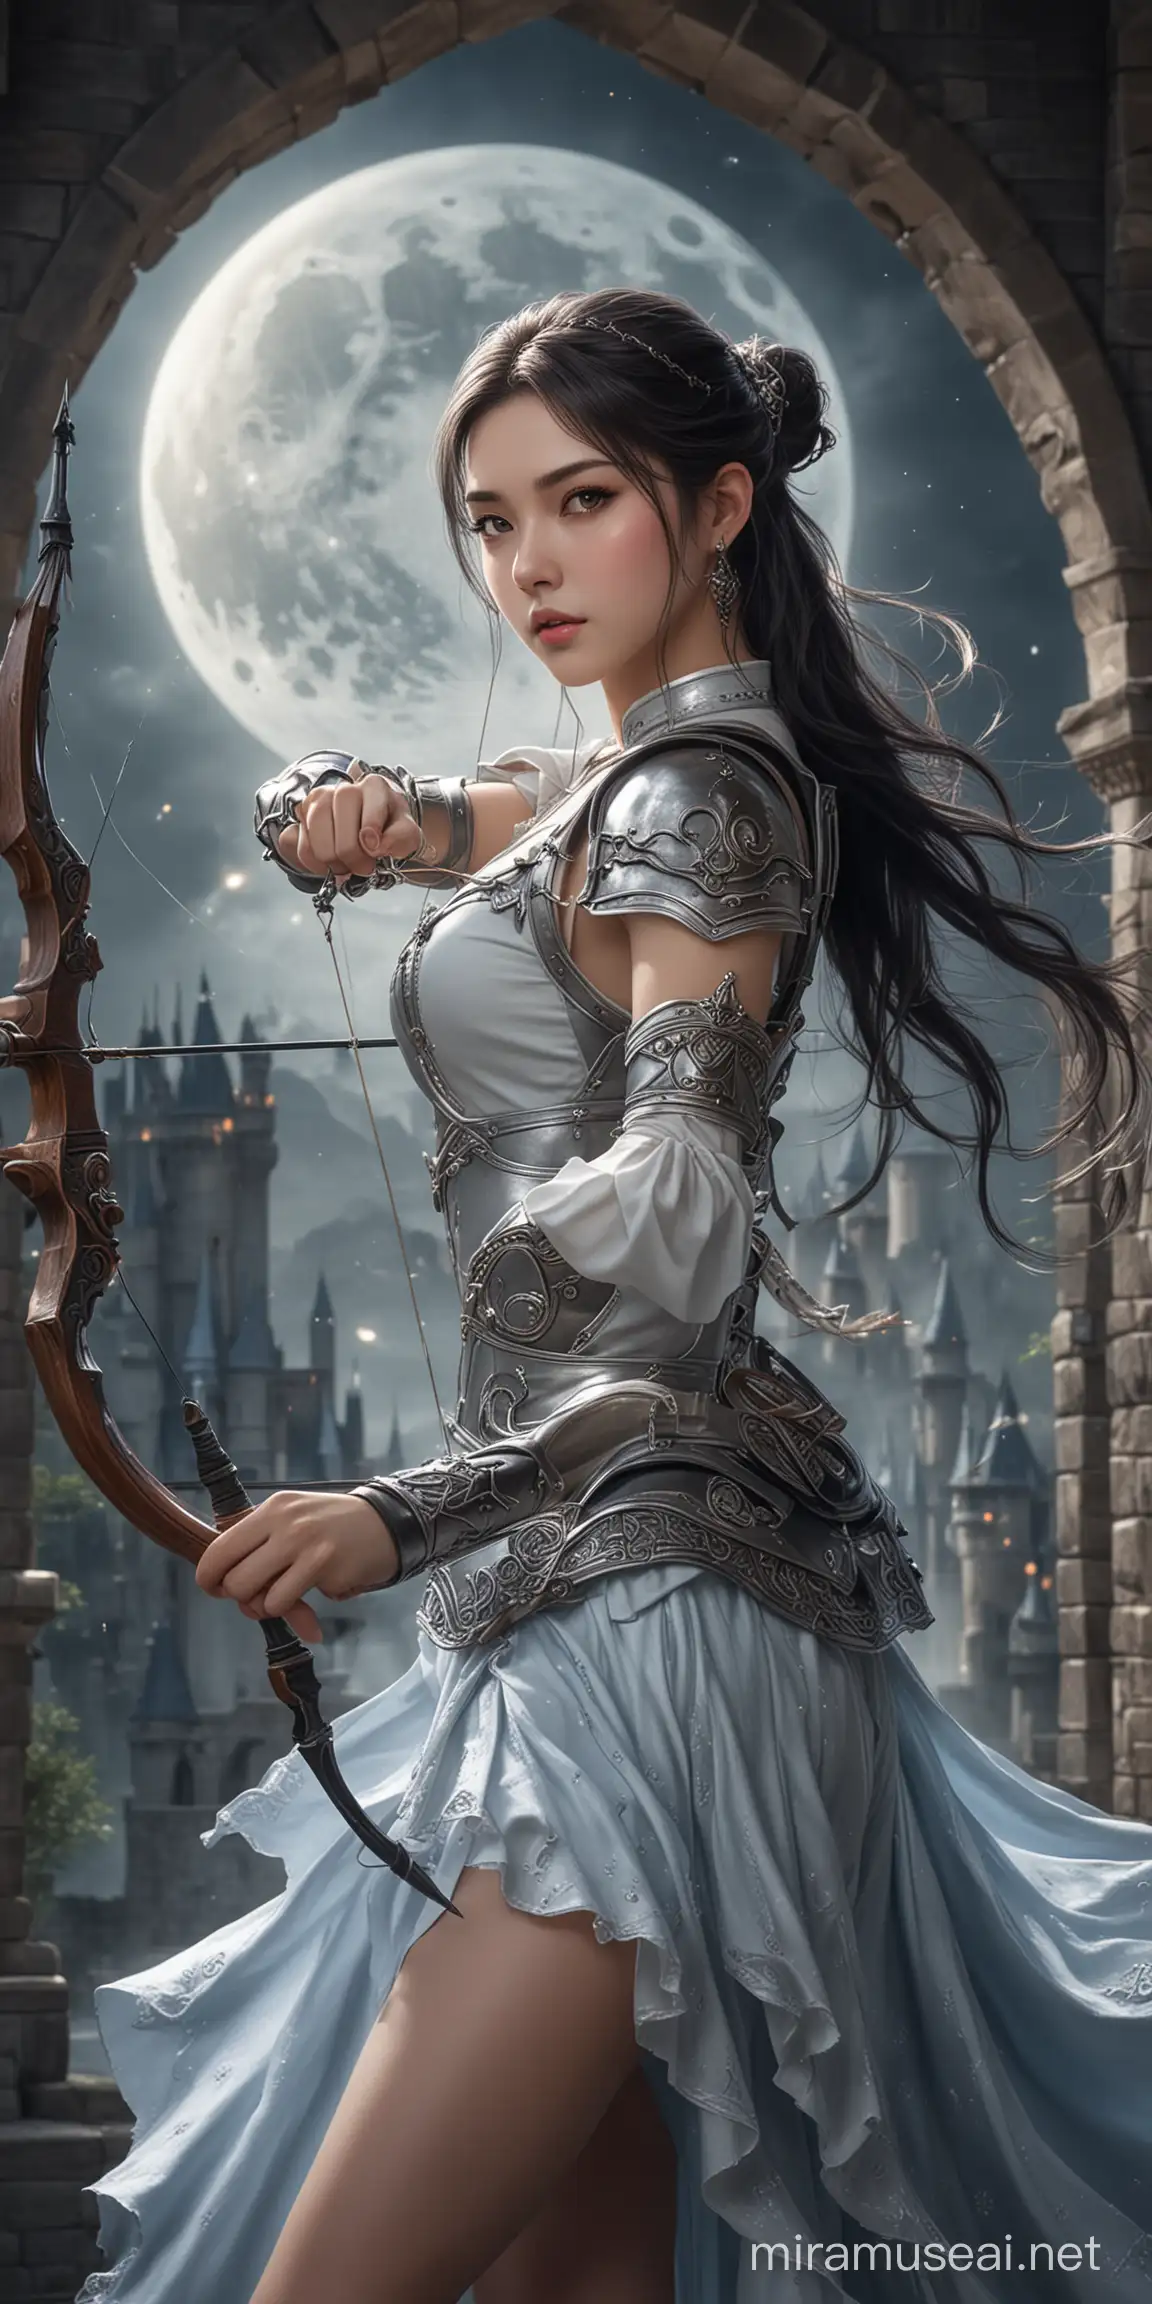 Gadis idol realistis yang sangat cantik, moon element beauty sexy elegant archer, background fantasy castle, fotostudio yang sangat detail, pencahayaan lampu studio, focused medium shot